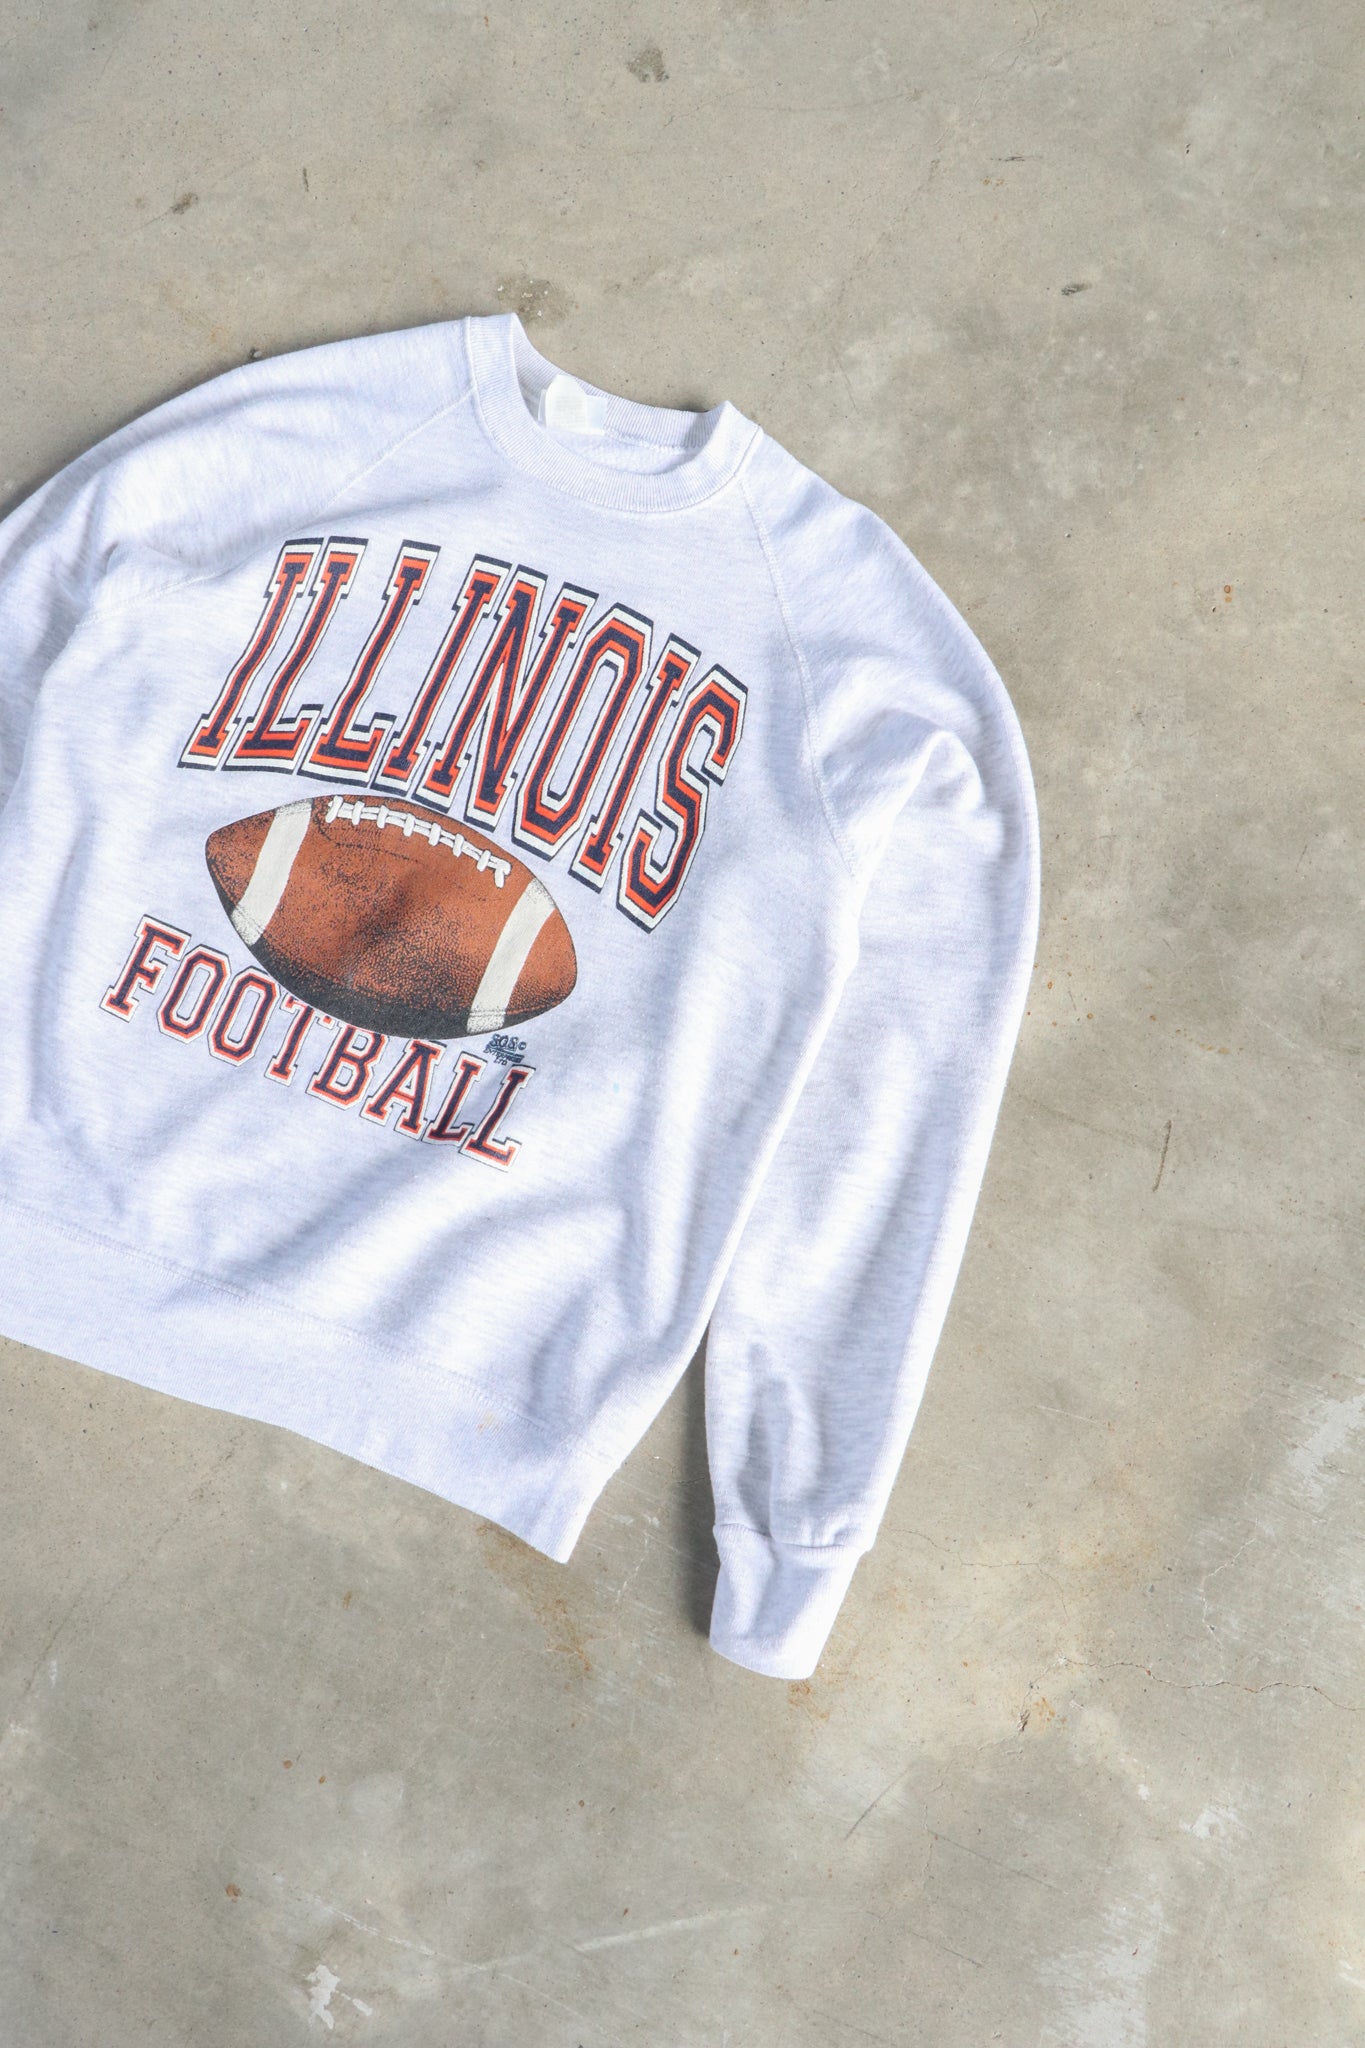 Vintage Illinois Football Sweater Small